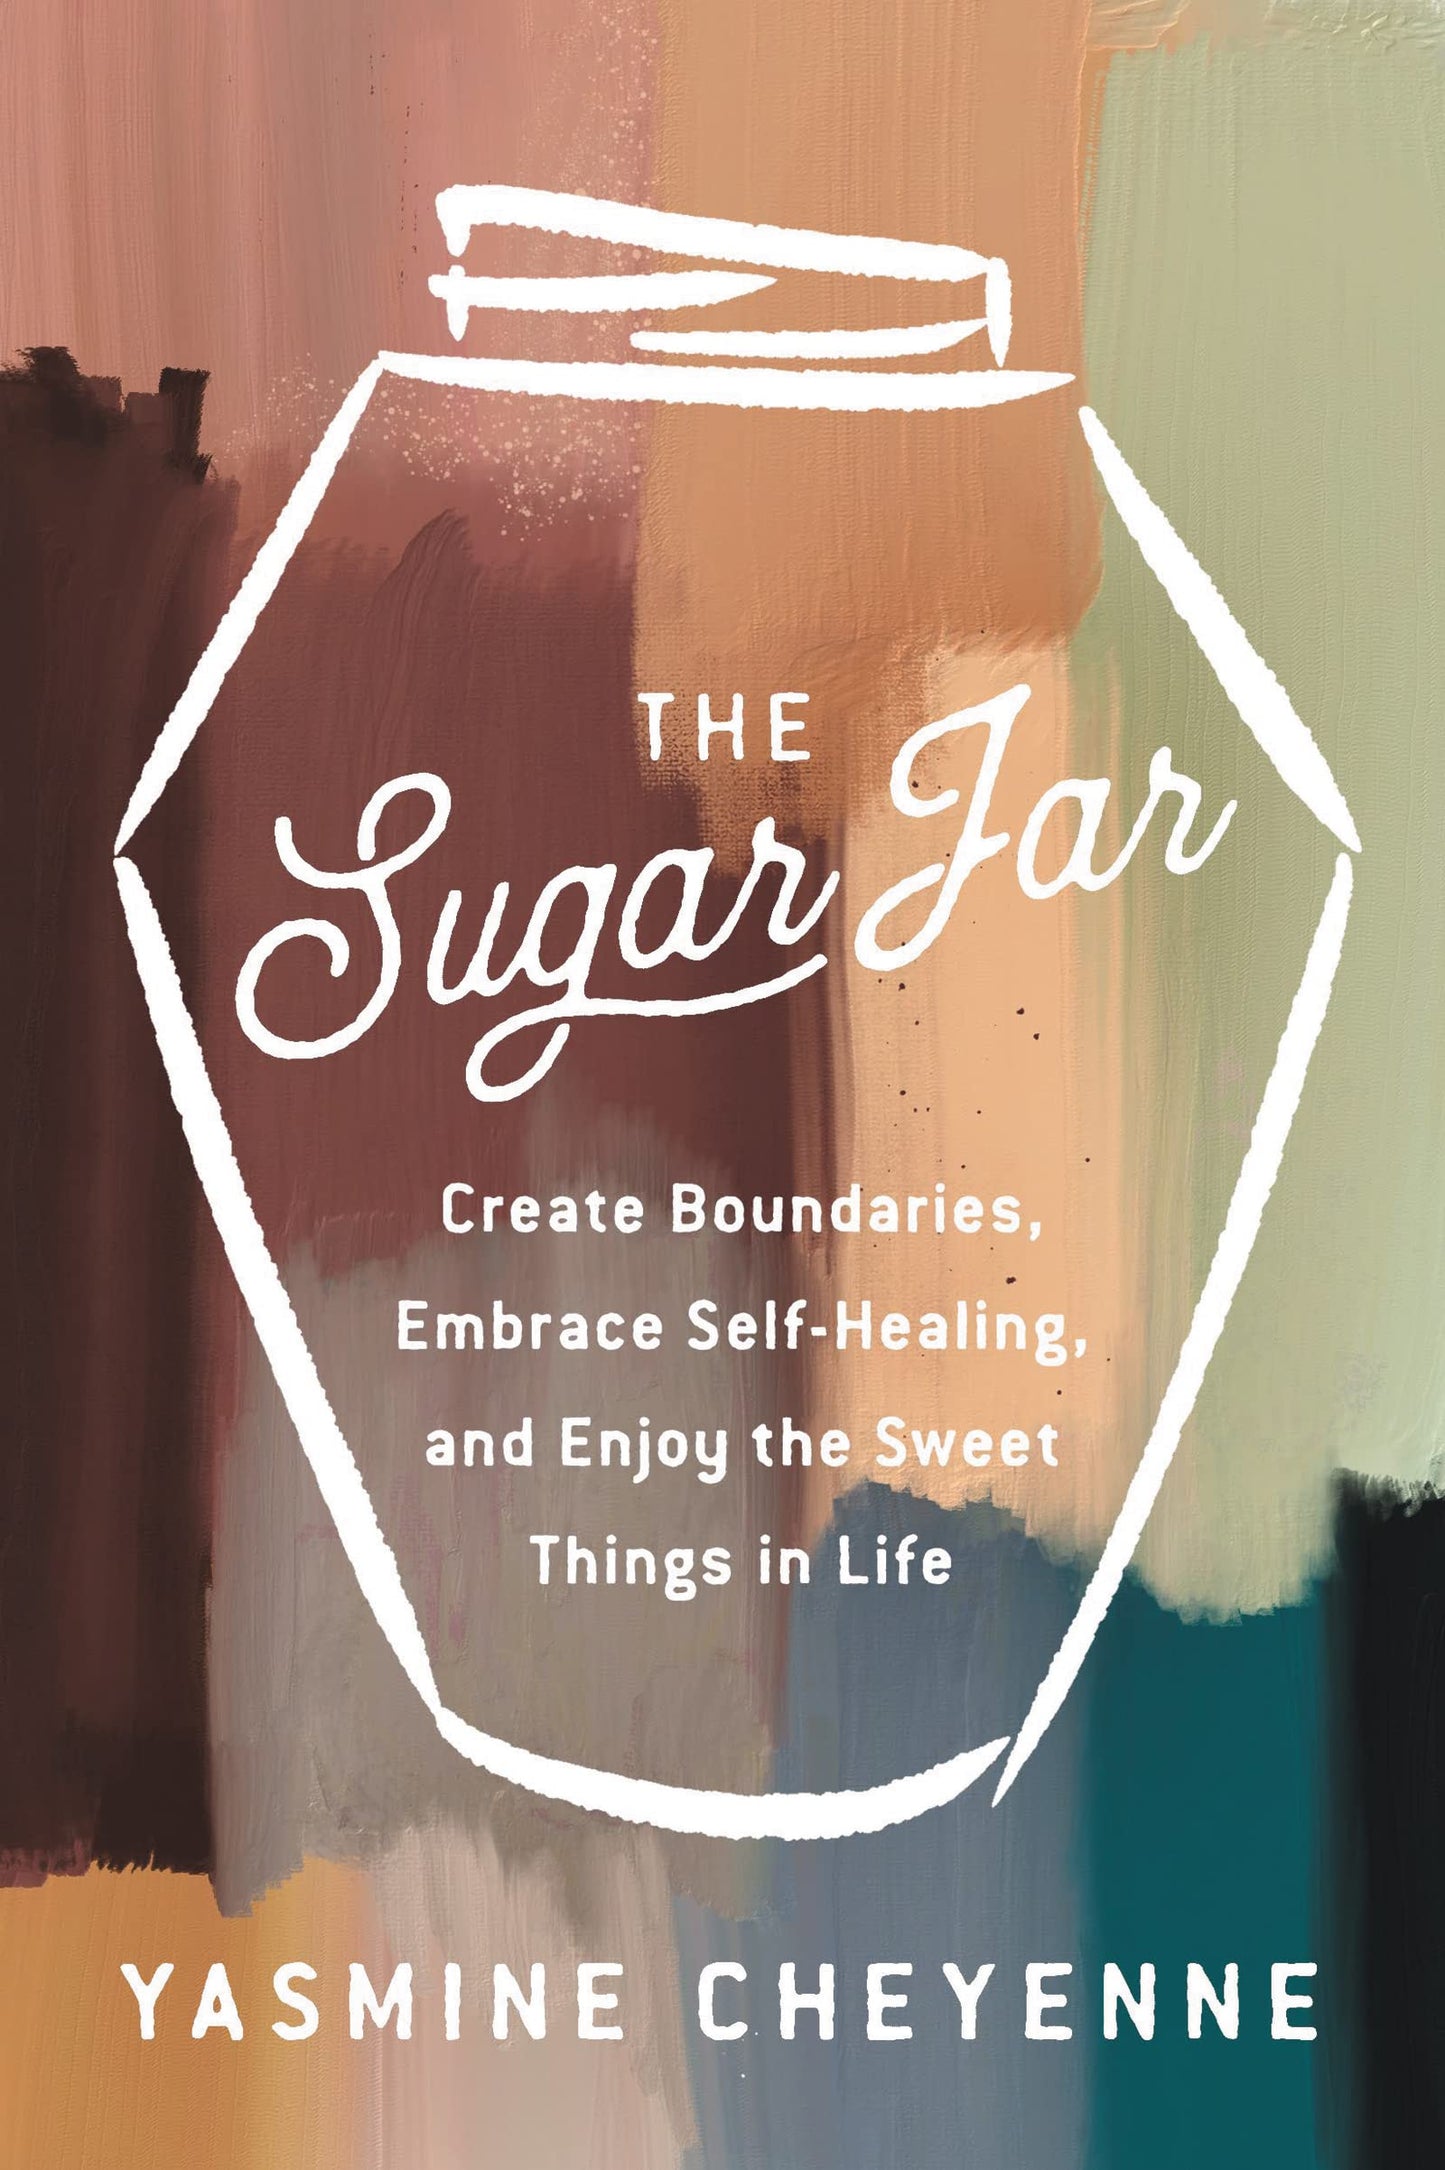 The Sugar Jar // Create Boundaries, Embrace Self-Healing, and Enjoy the Sweet Things in Life